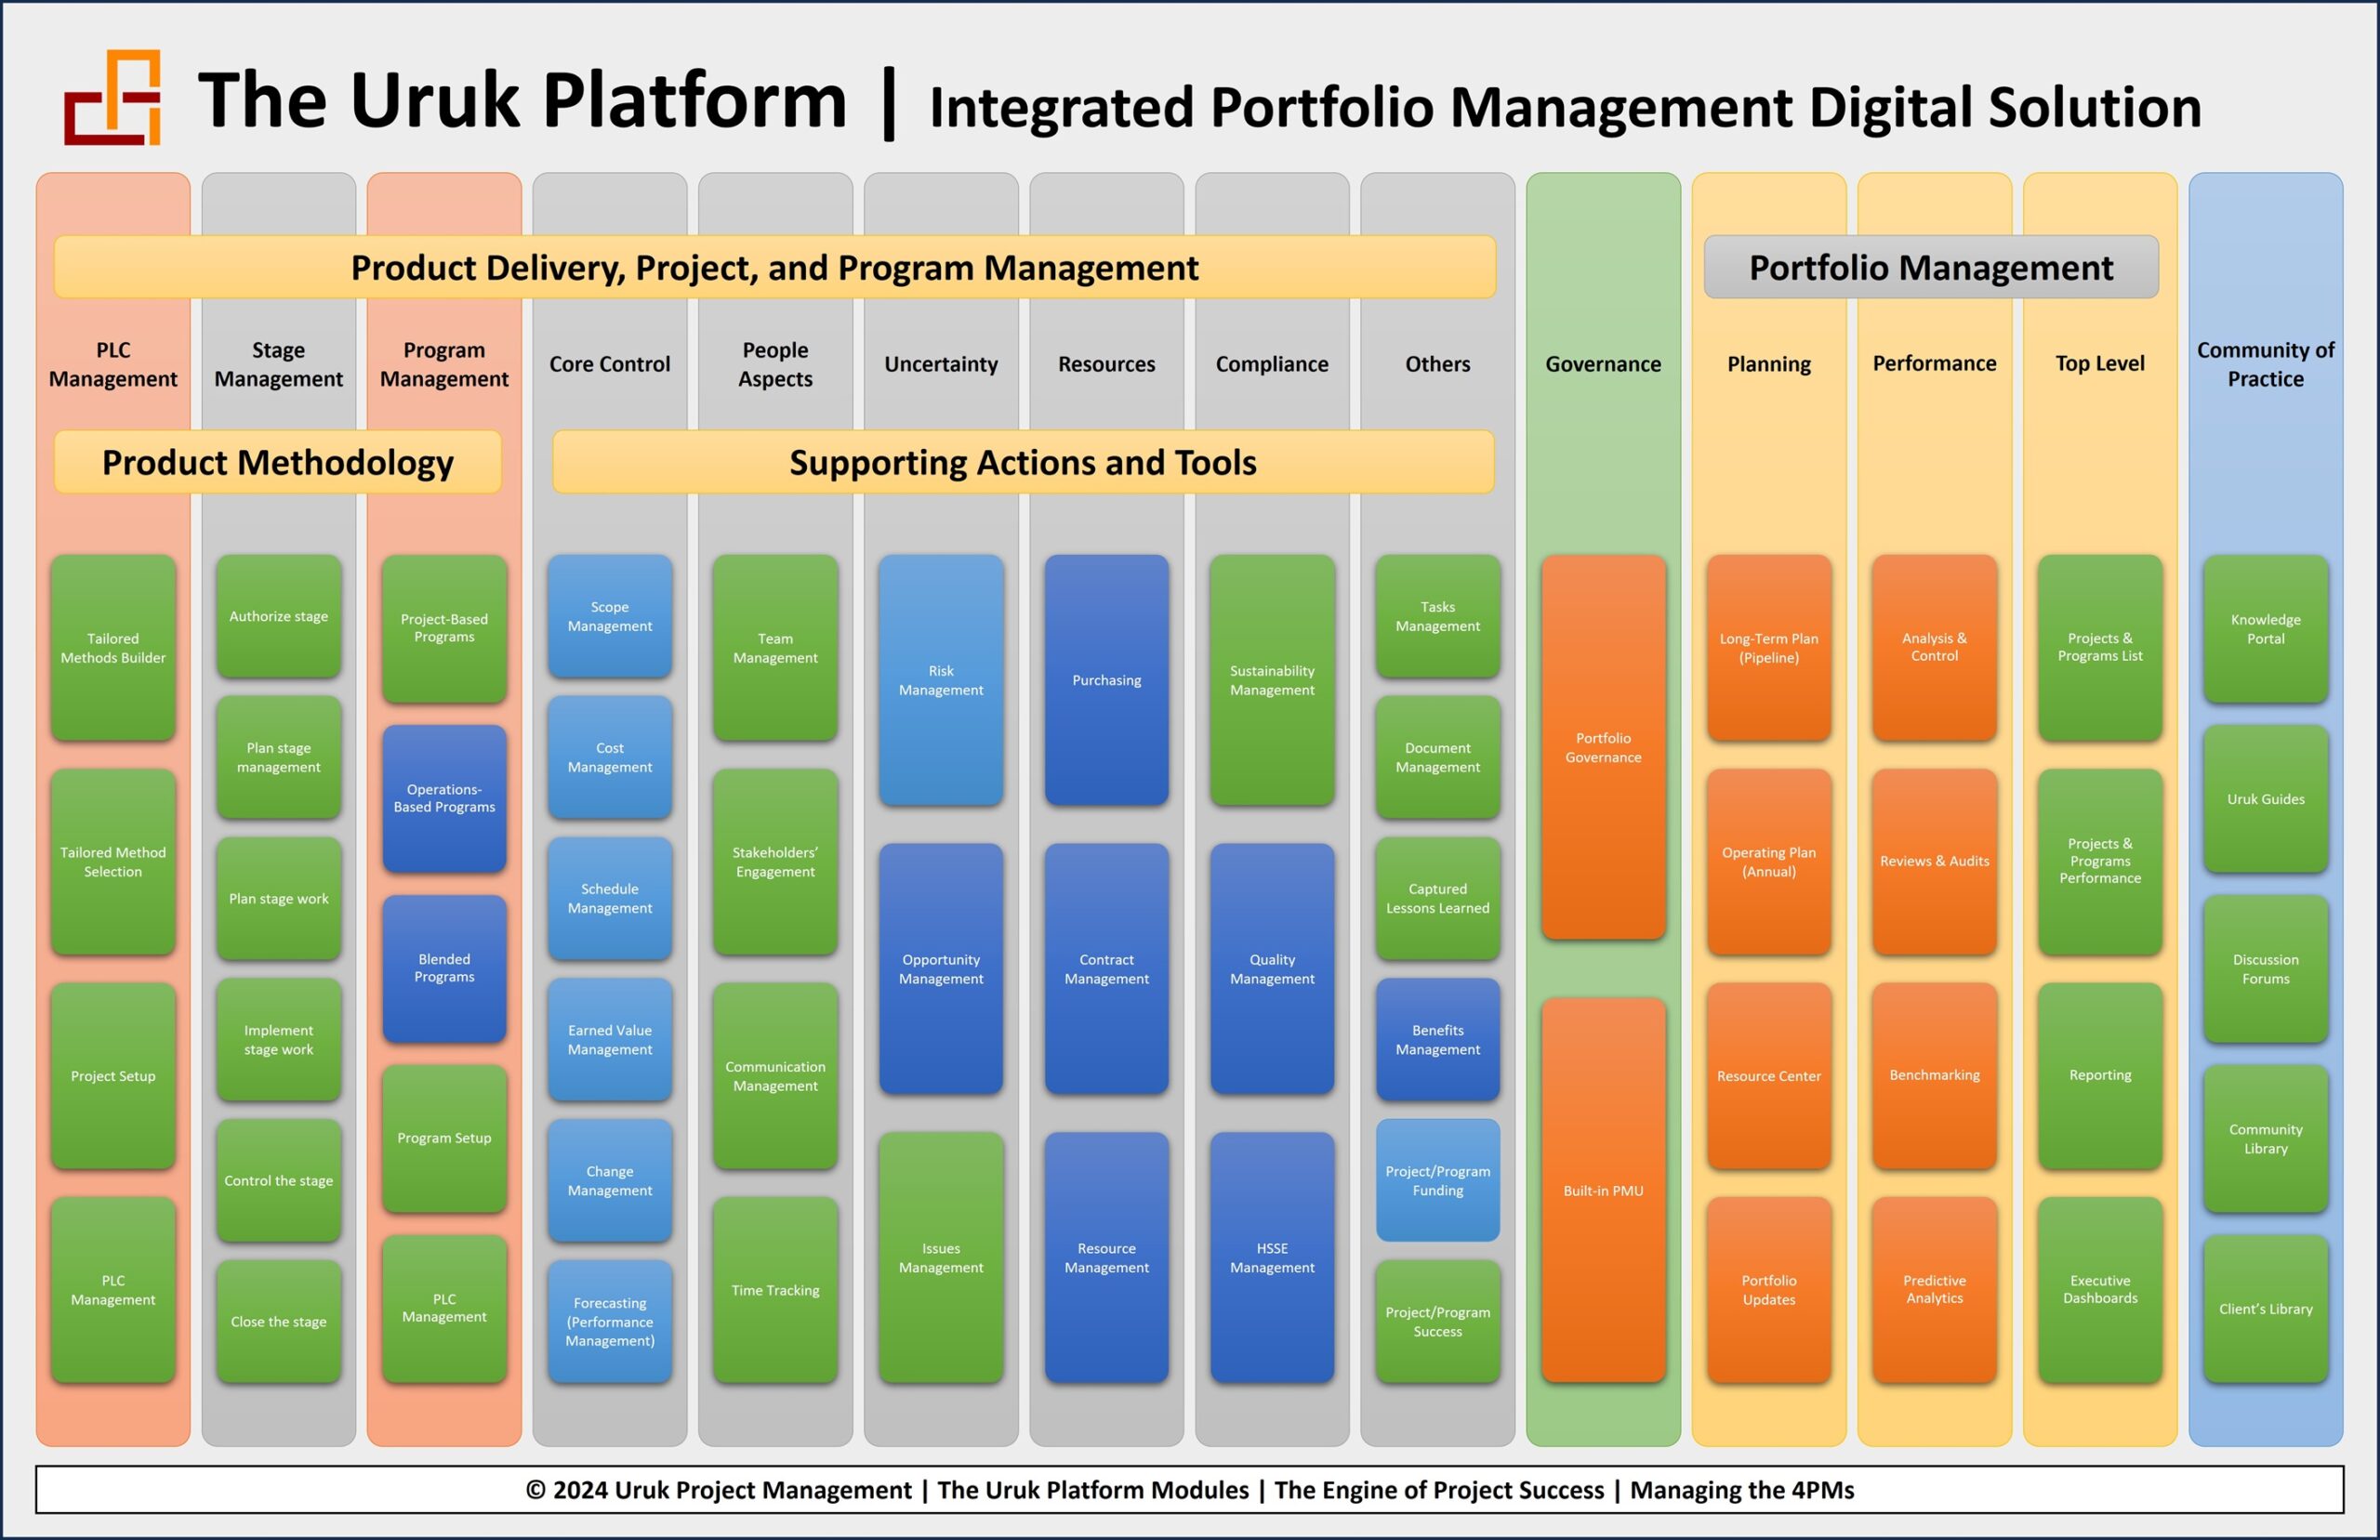 The Uruk Platform Structure, an Integrated Portfolio Management Digital Solution